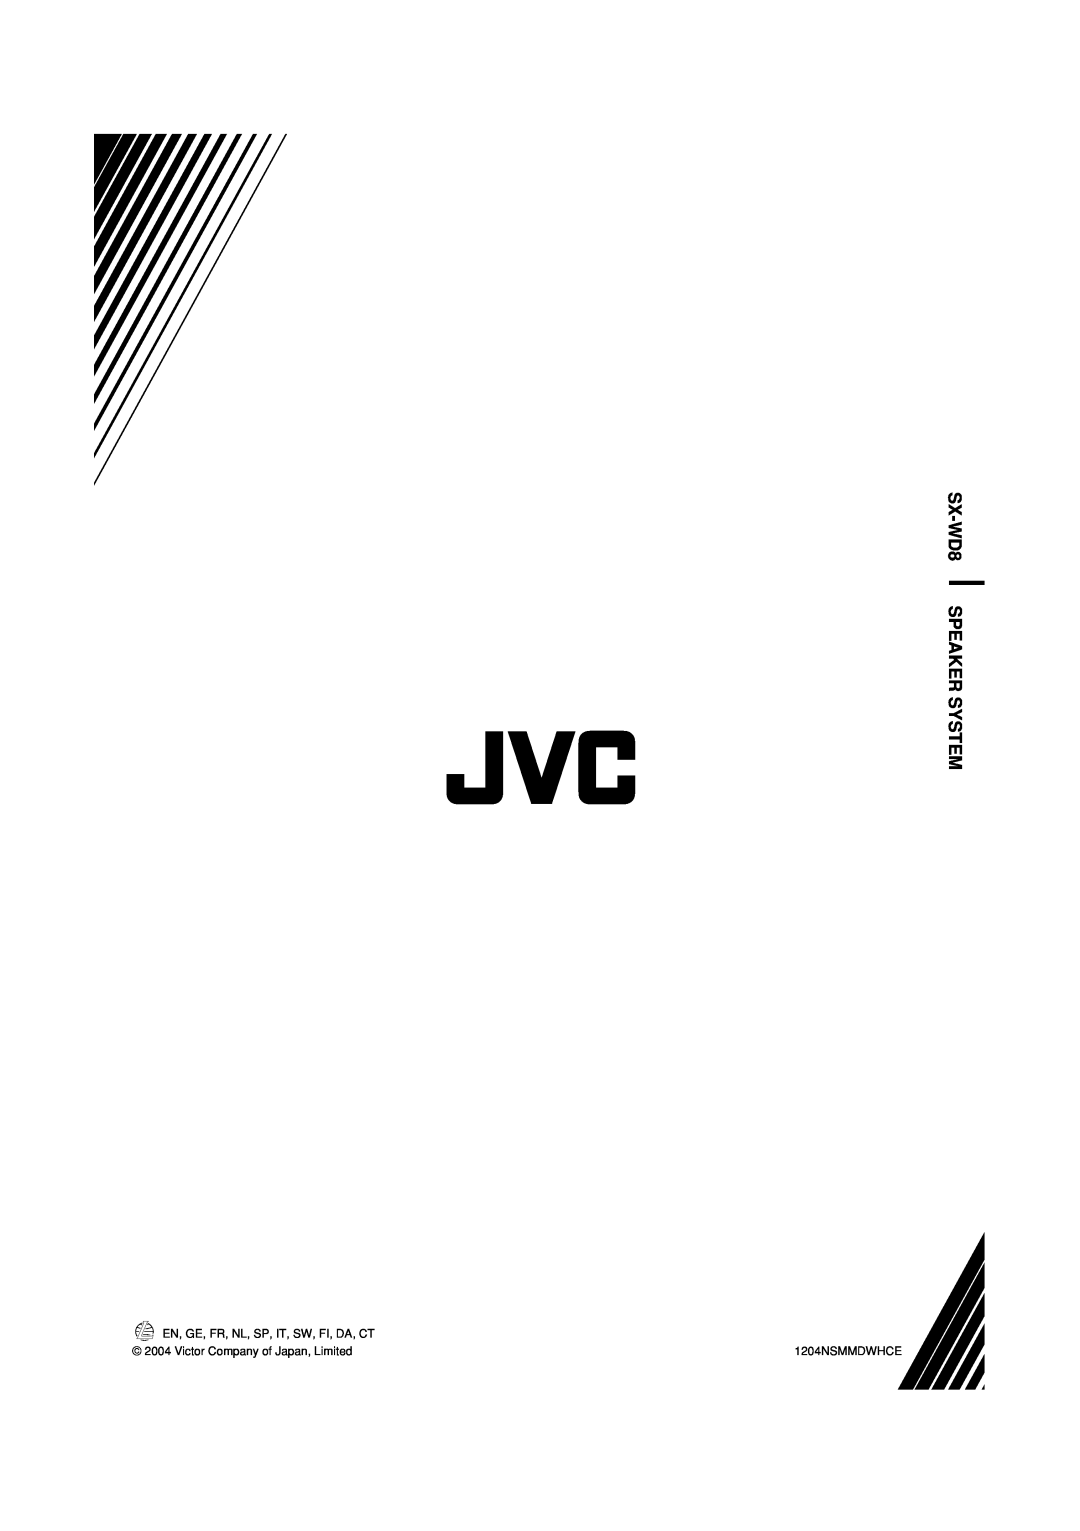 JVC LVT1293-002A manual SX-WD8SPEAKER SYSTEM, En, Ge, Fr, Nl, Sp, It, Sw, Fi, Da, Ct, Victor Company of Japan, Limited 